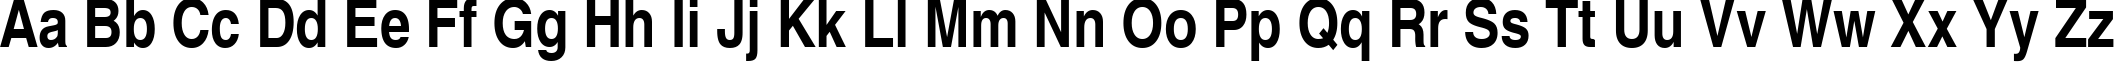 Пример написания английского алфавита шрифтом Helvetica Narrow Bold